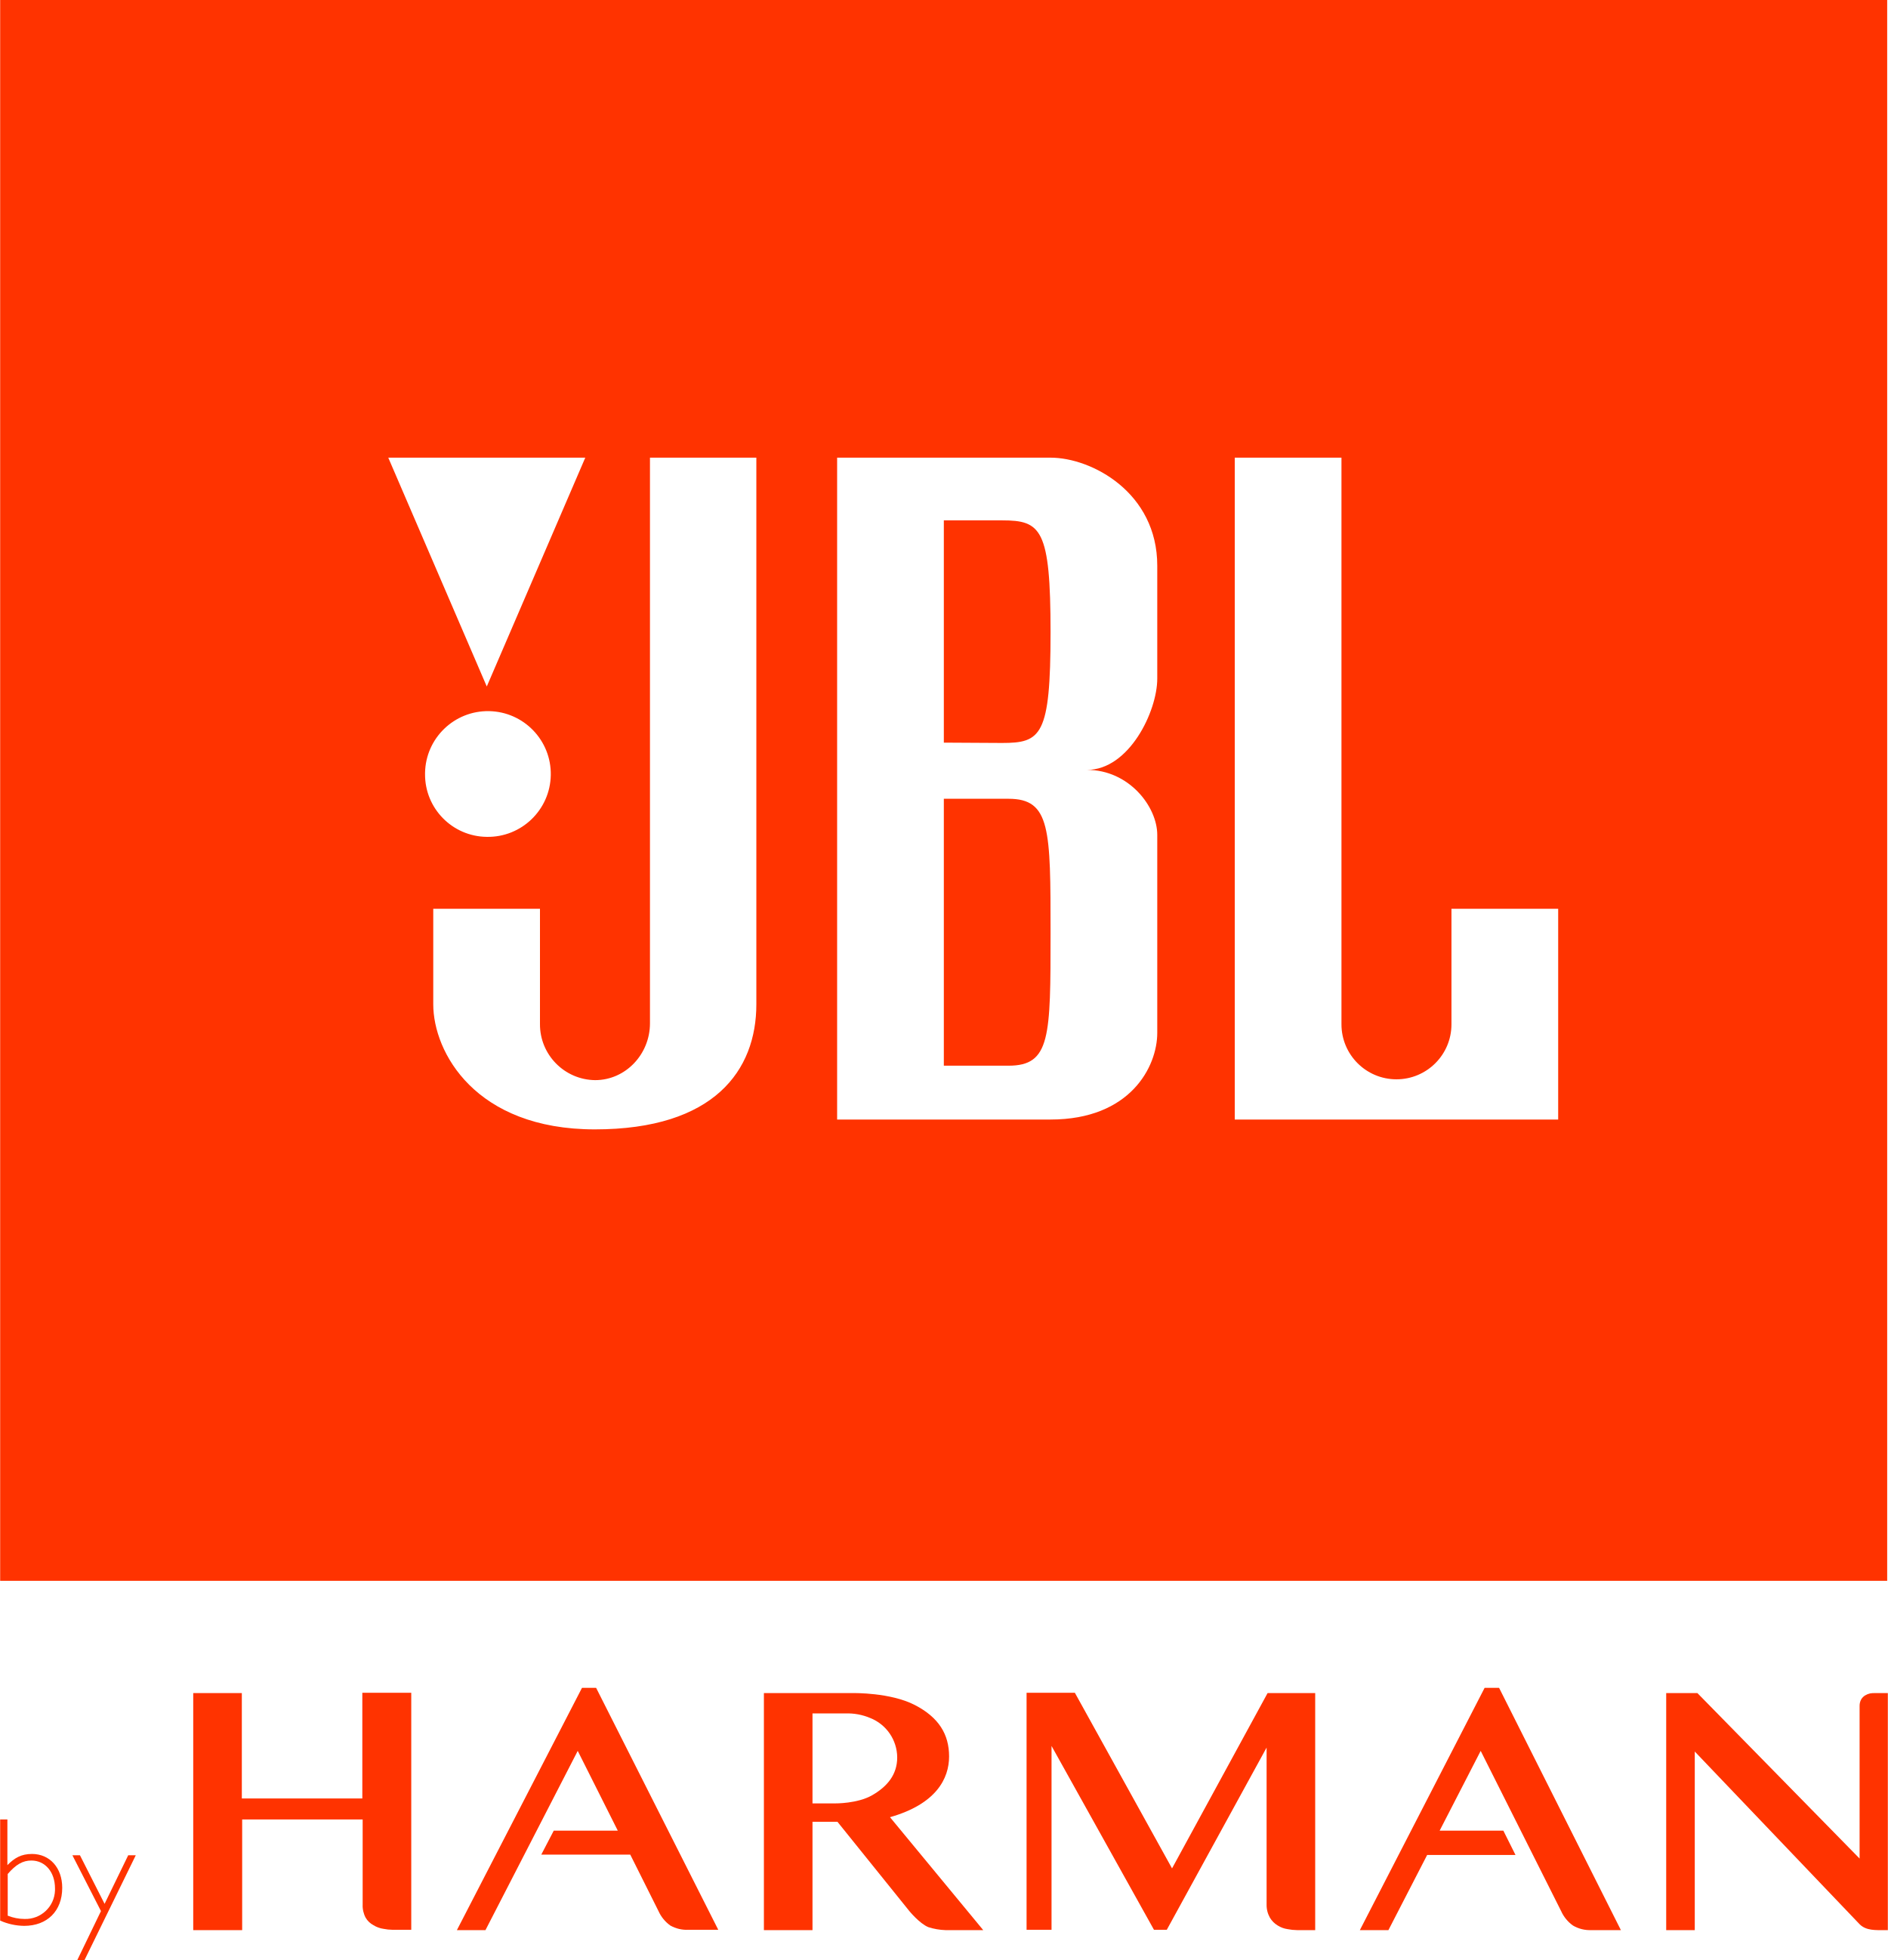 JBL Bar 5.0 Multibeam